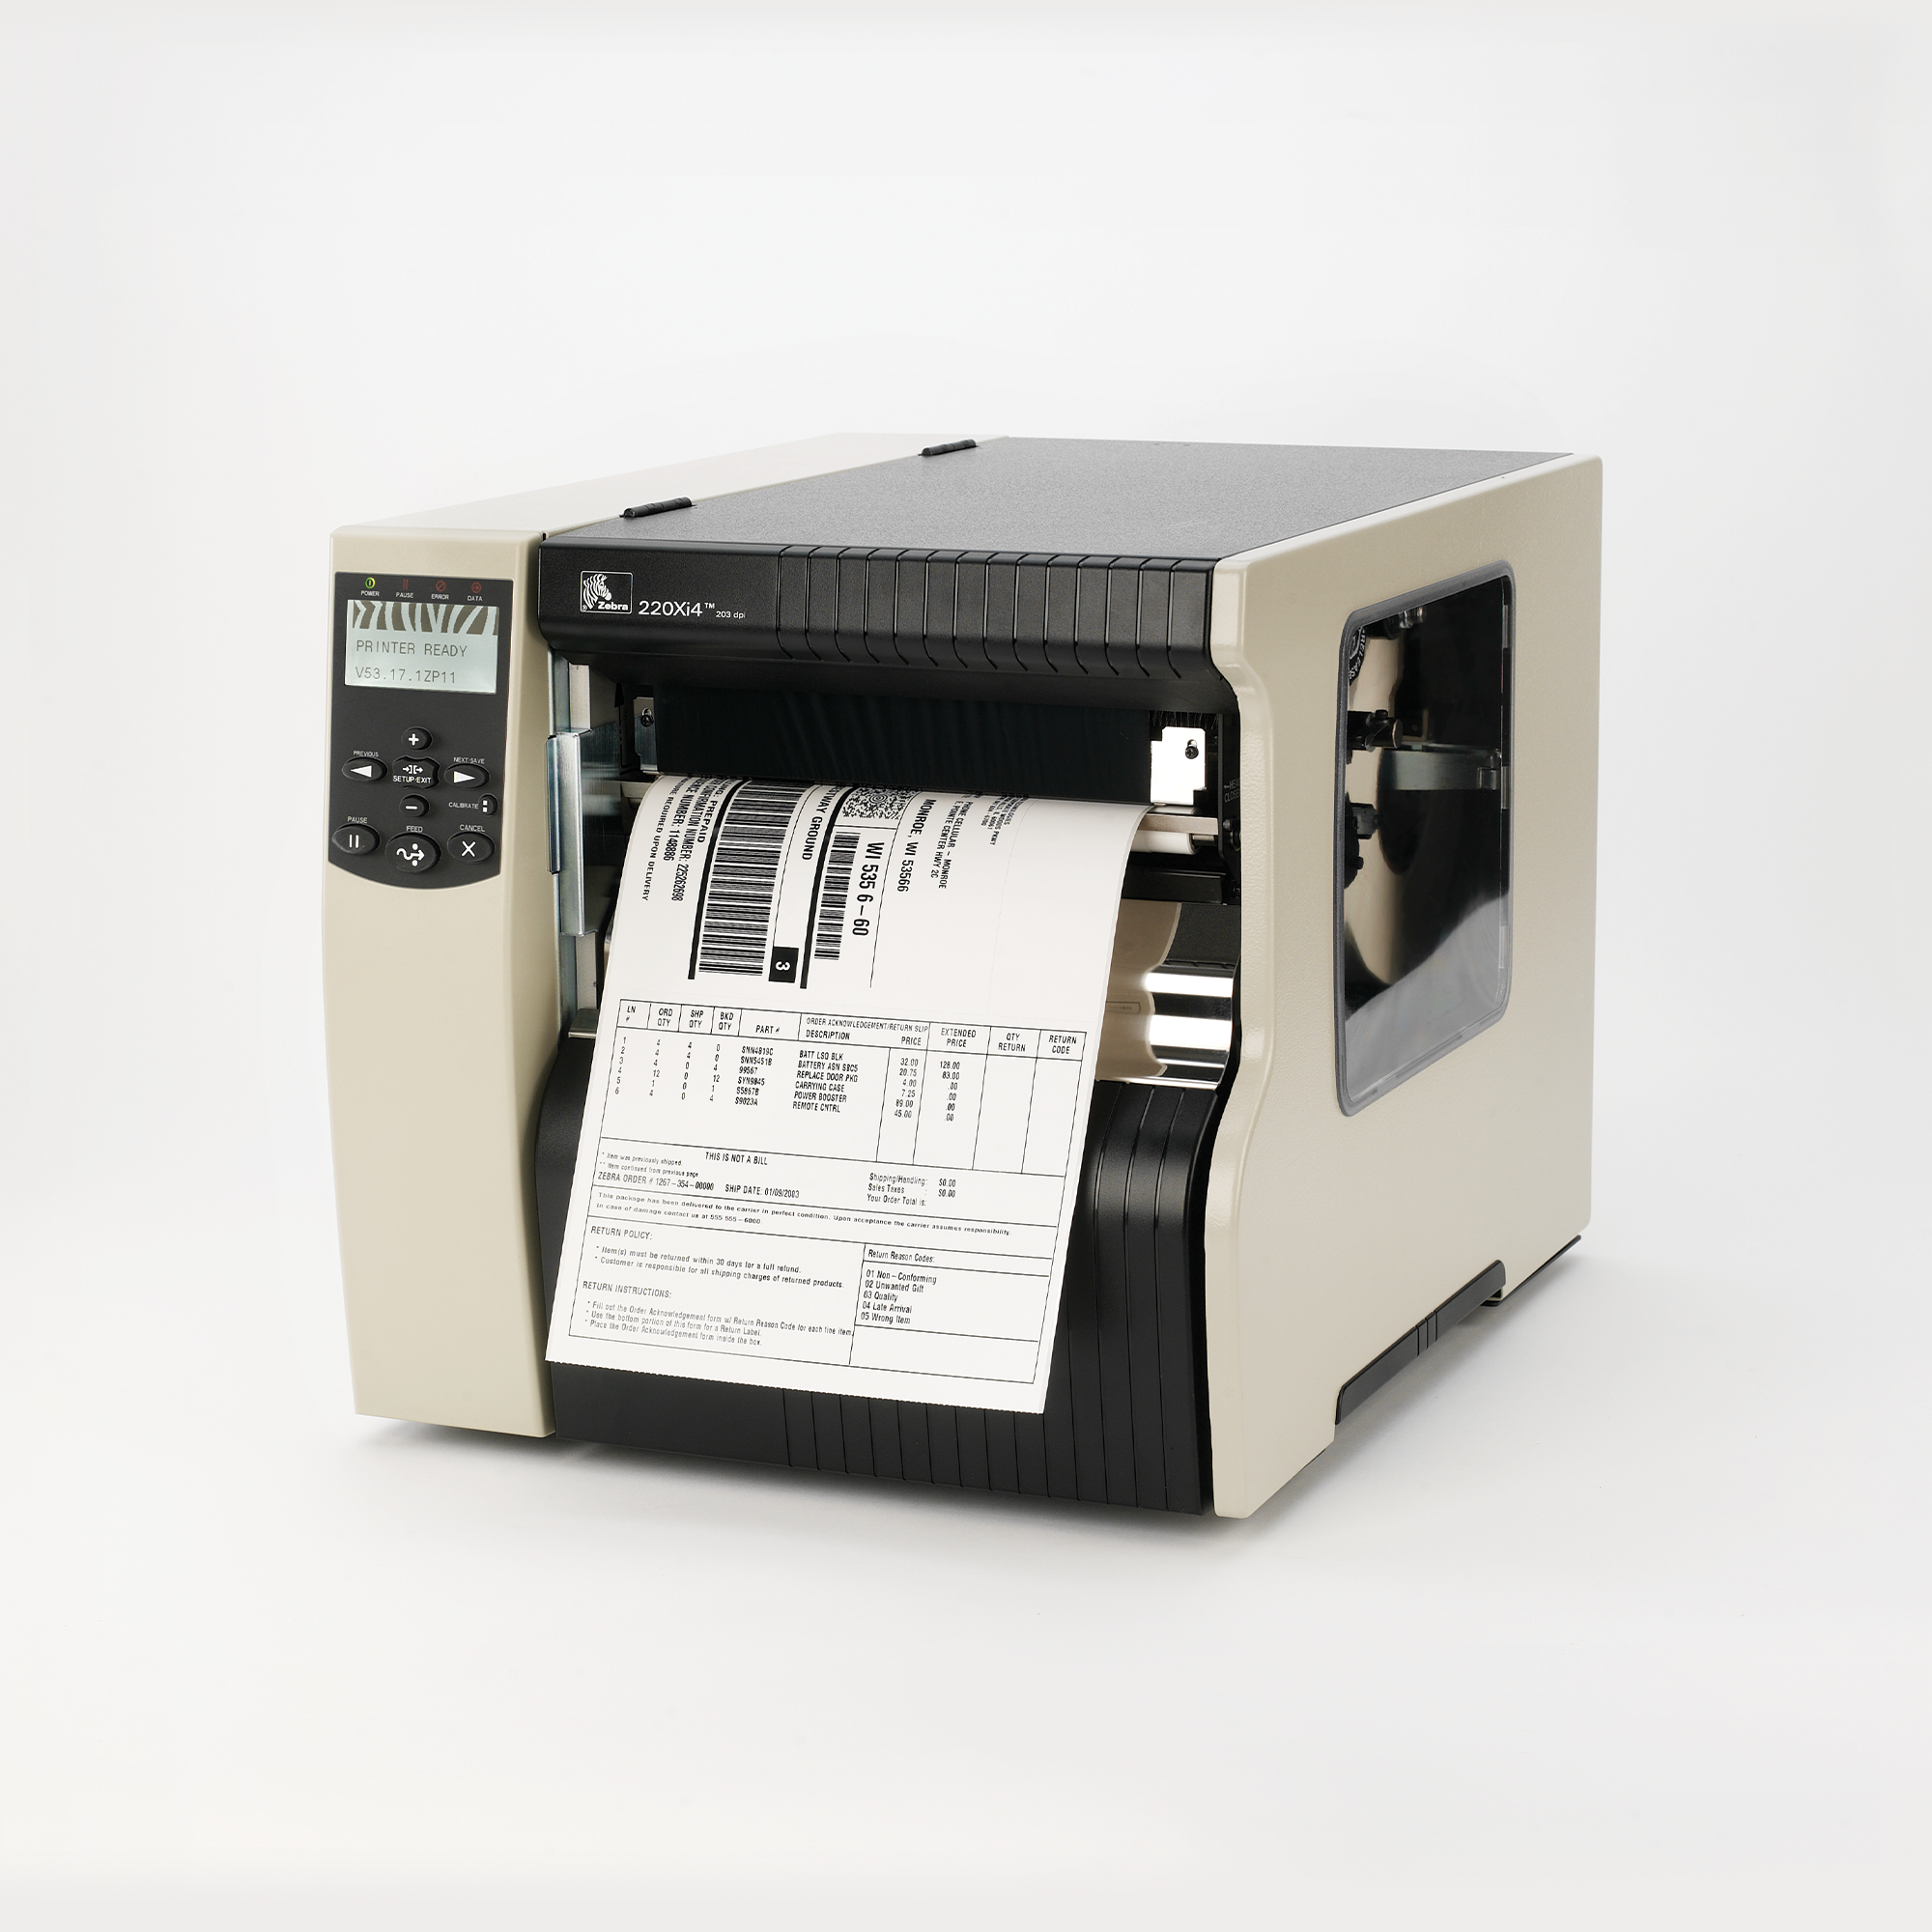 Zebra 220Xi4 Thermal Transfer Printer - 203dpi, US Cord, Serial, Parallel, USB, Int 10/100, Rewind with Peel - MPN: 220-801-00200